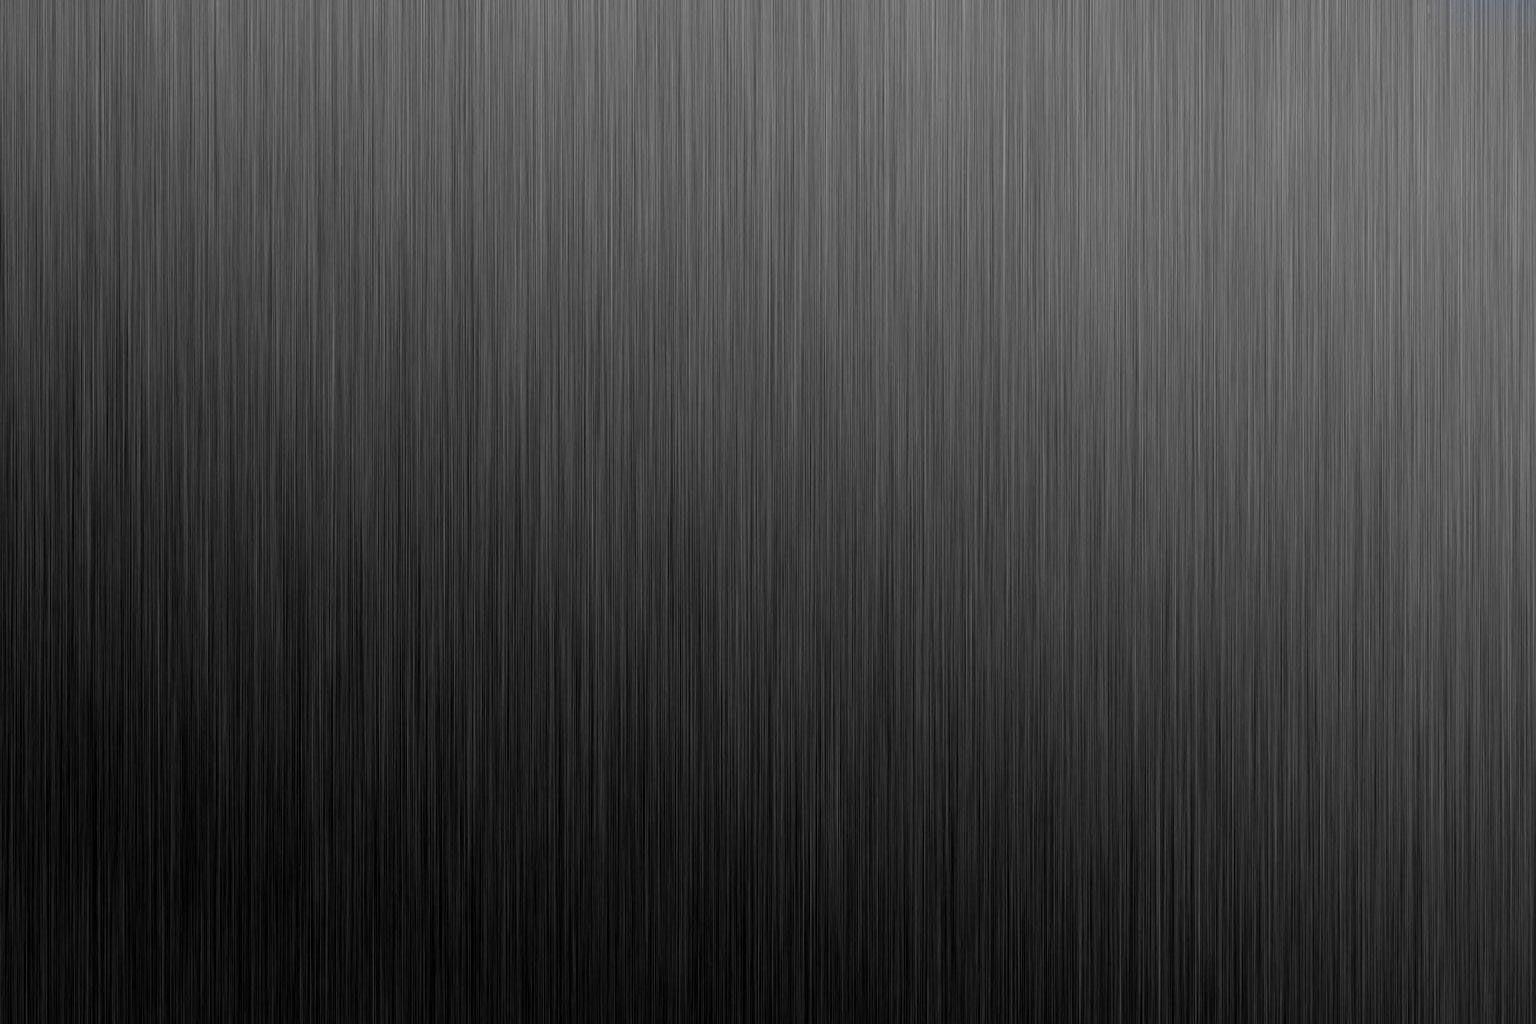 Abstract Dark Metallic iPhone s Wallpaper HD 1280×800 Black